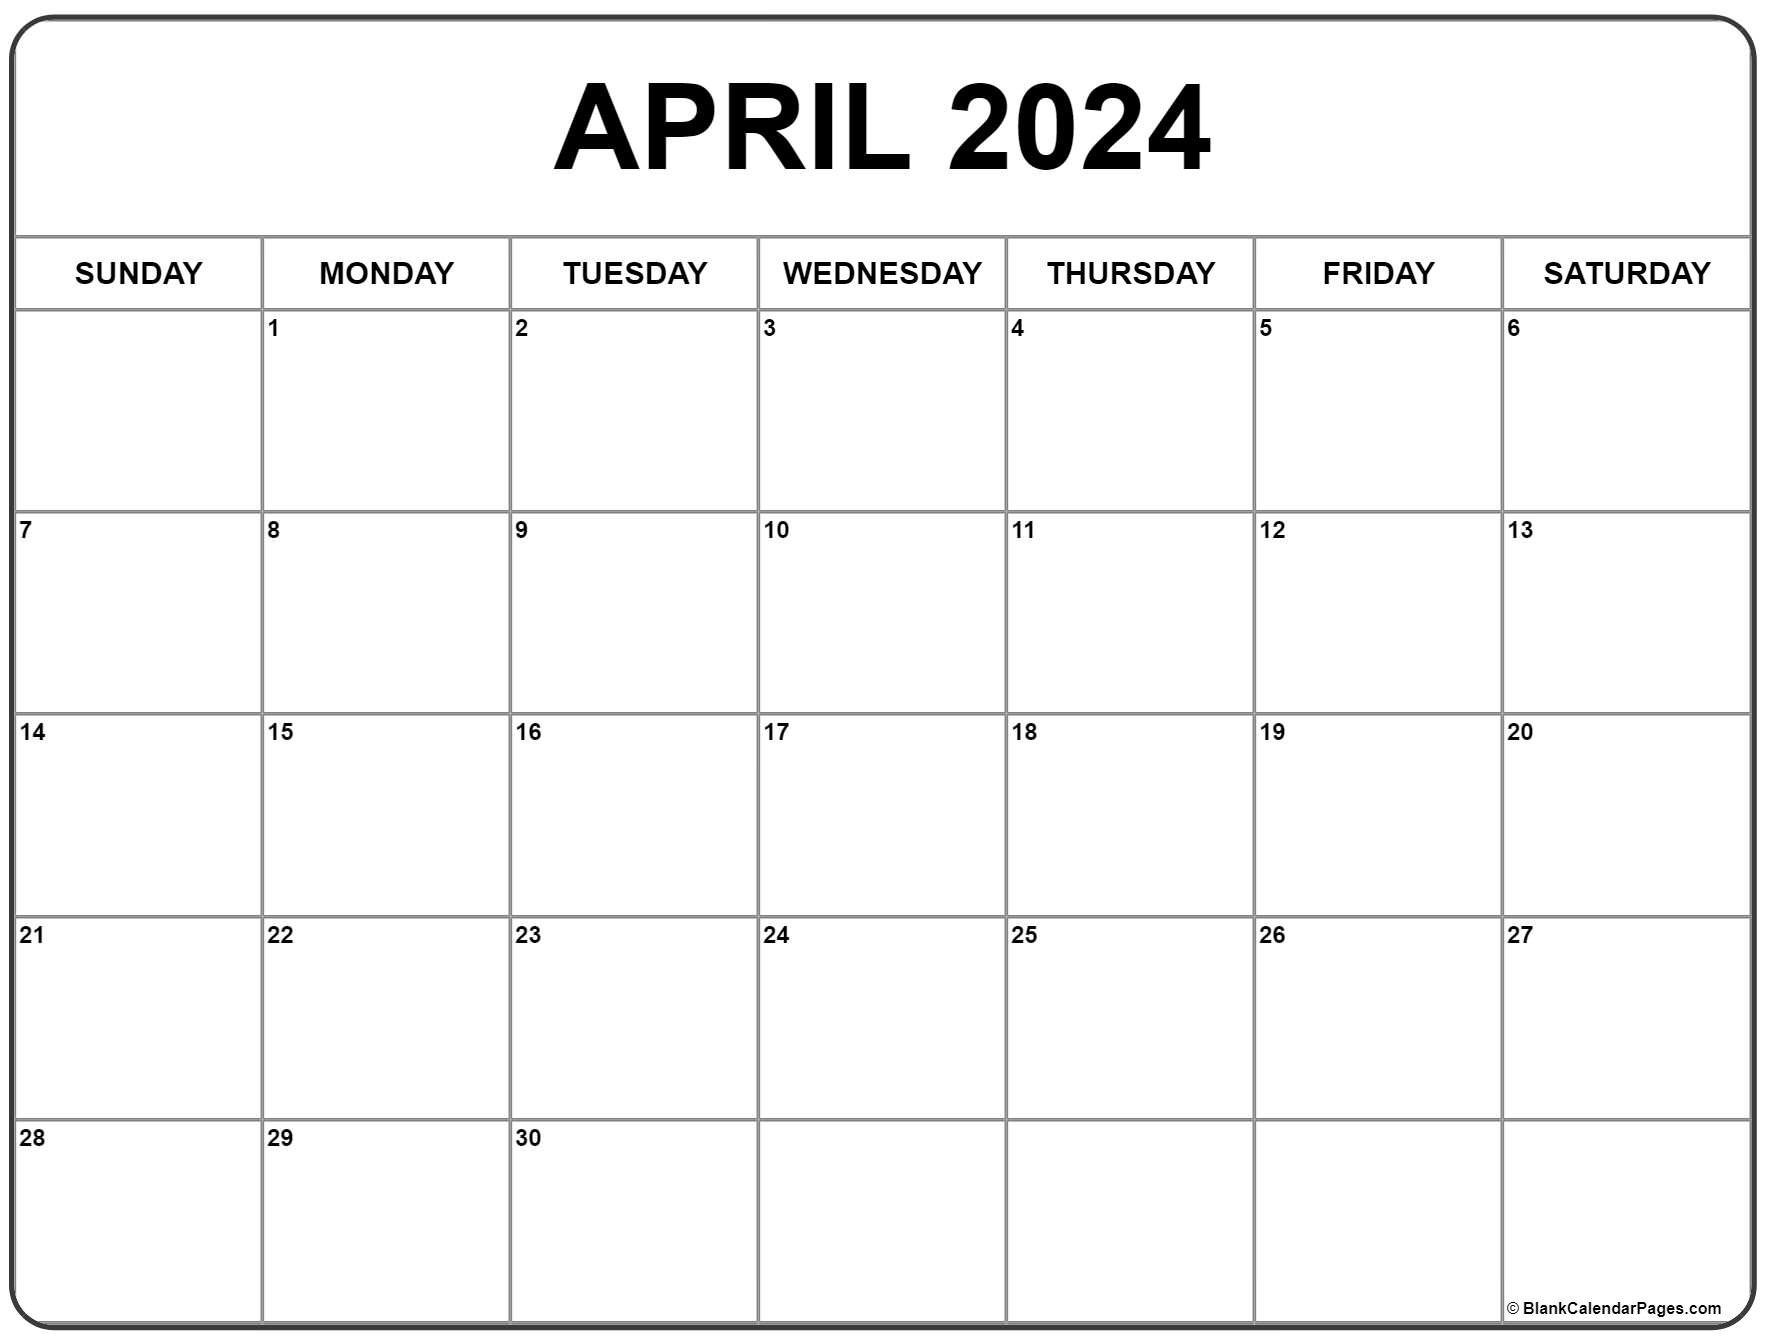 April 2024 Calendar | Free Printable Calendar for 2024 April Printable Calendar